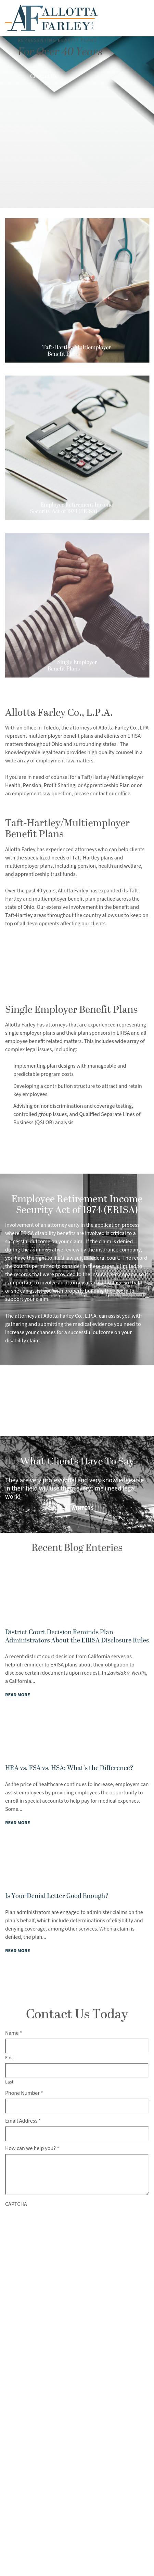 Allotta Farley Co LPA - Toledo OH Lawyers